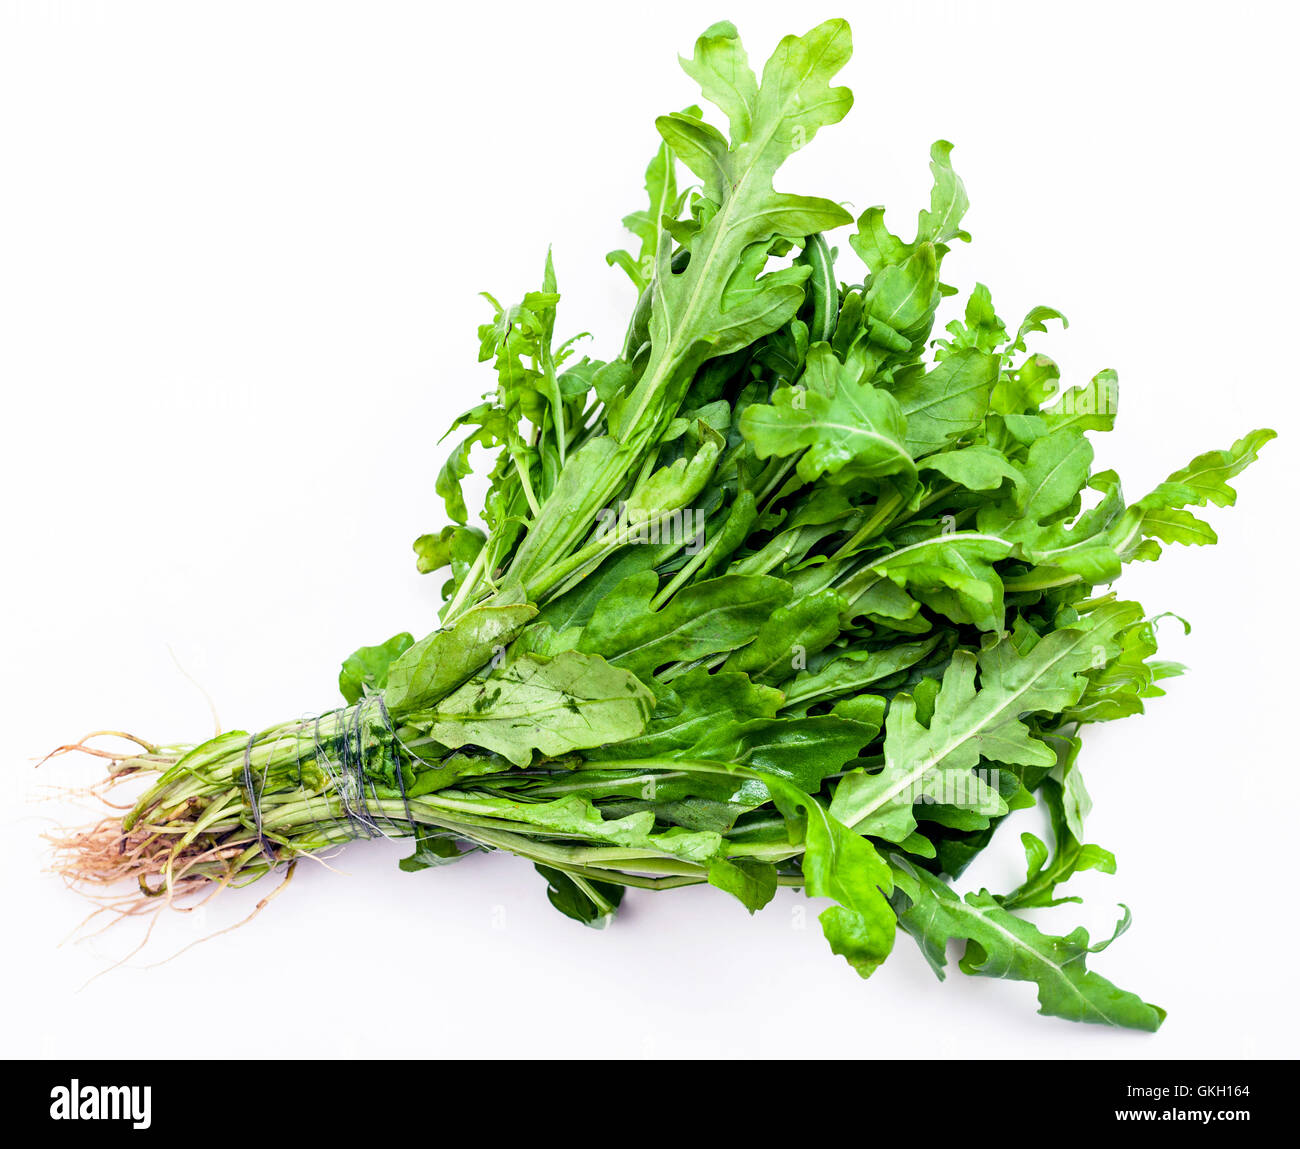 bunch of fresh cut green arugula herb on white background Stock Photo